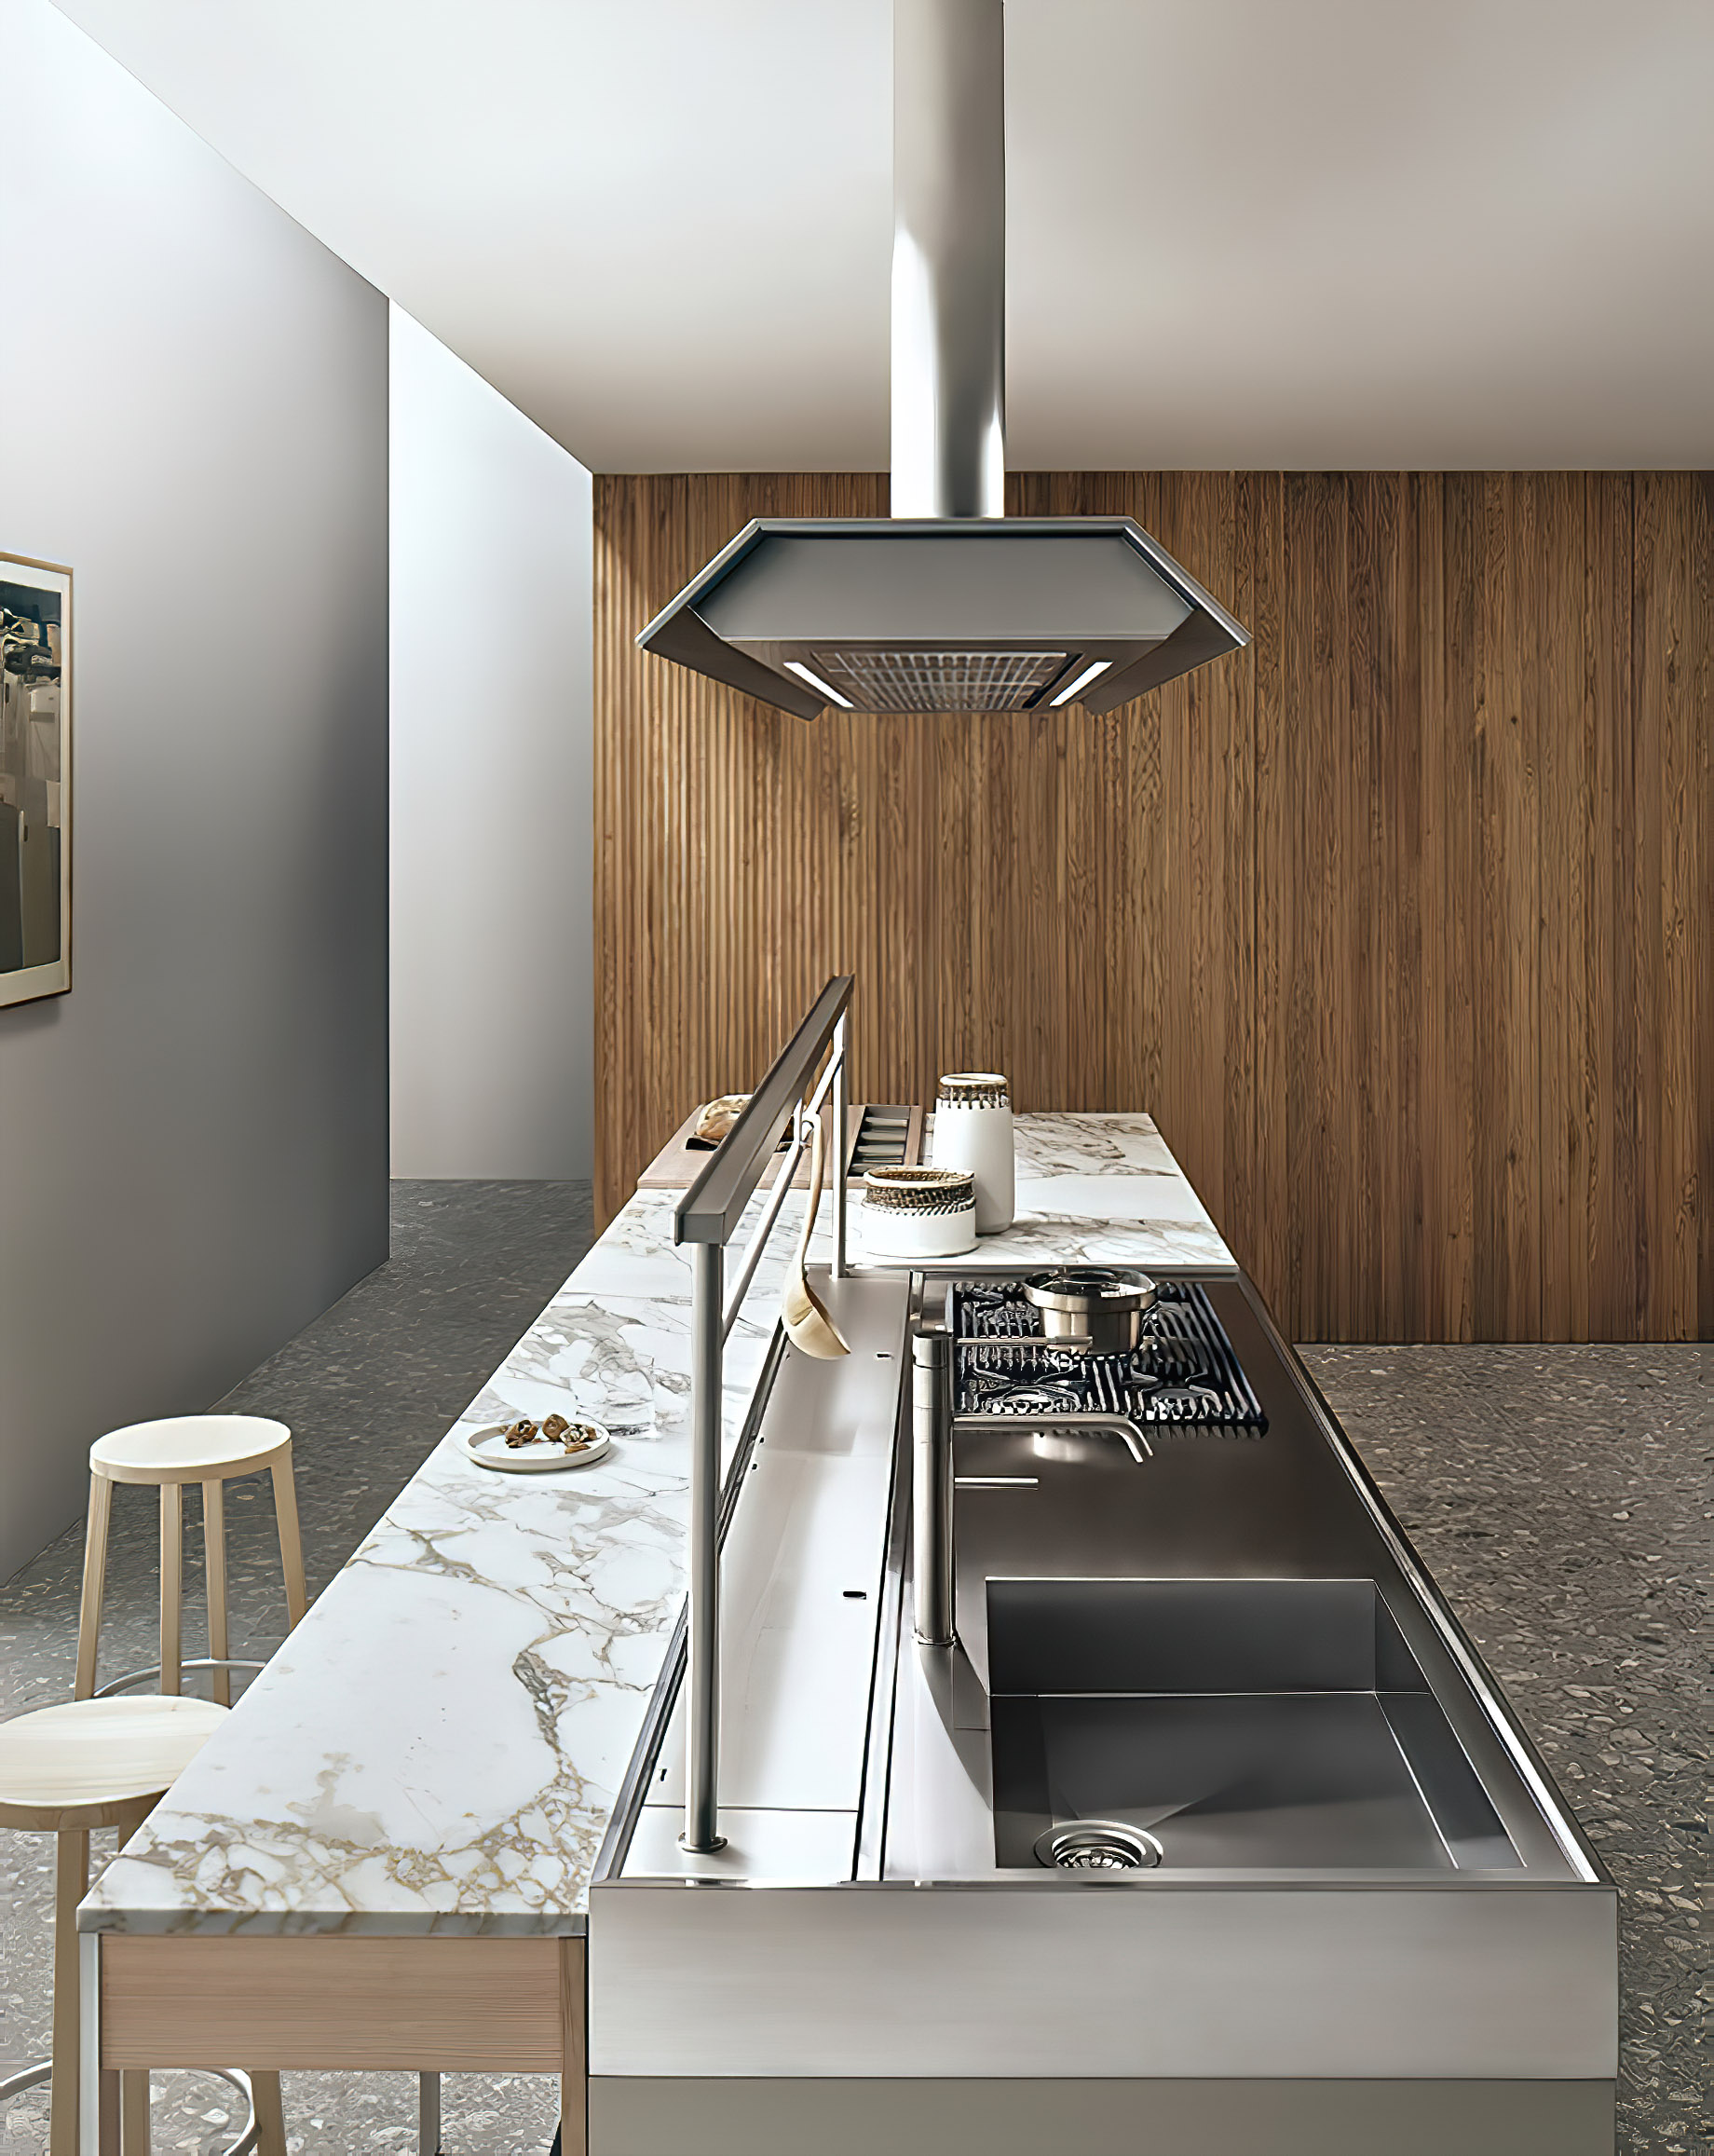 K-lab Contemporary Kitchen Ernestomeda Italy – Giuseppe Bavuso – Planet Hood